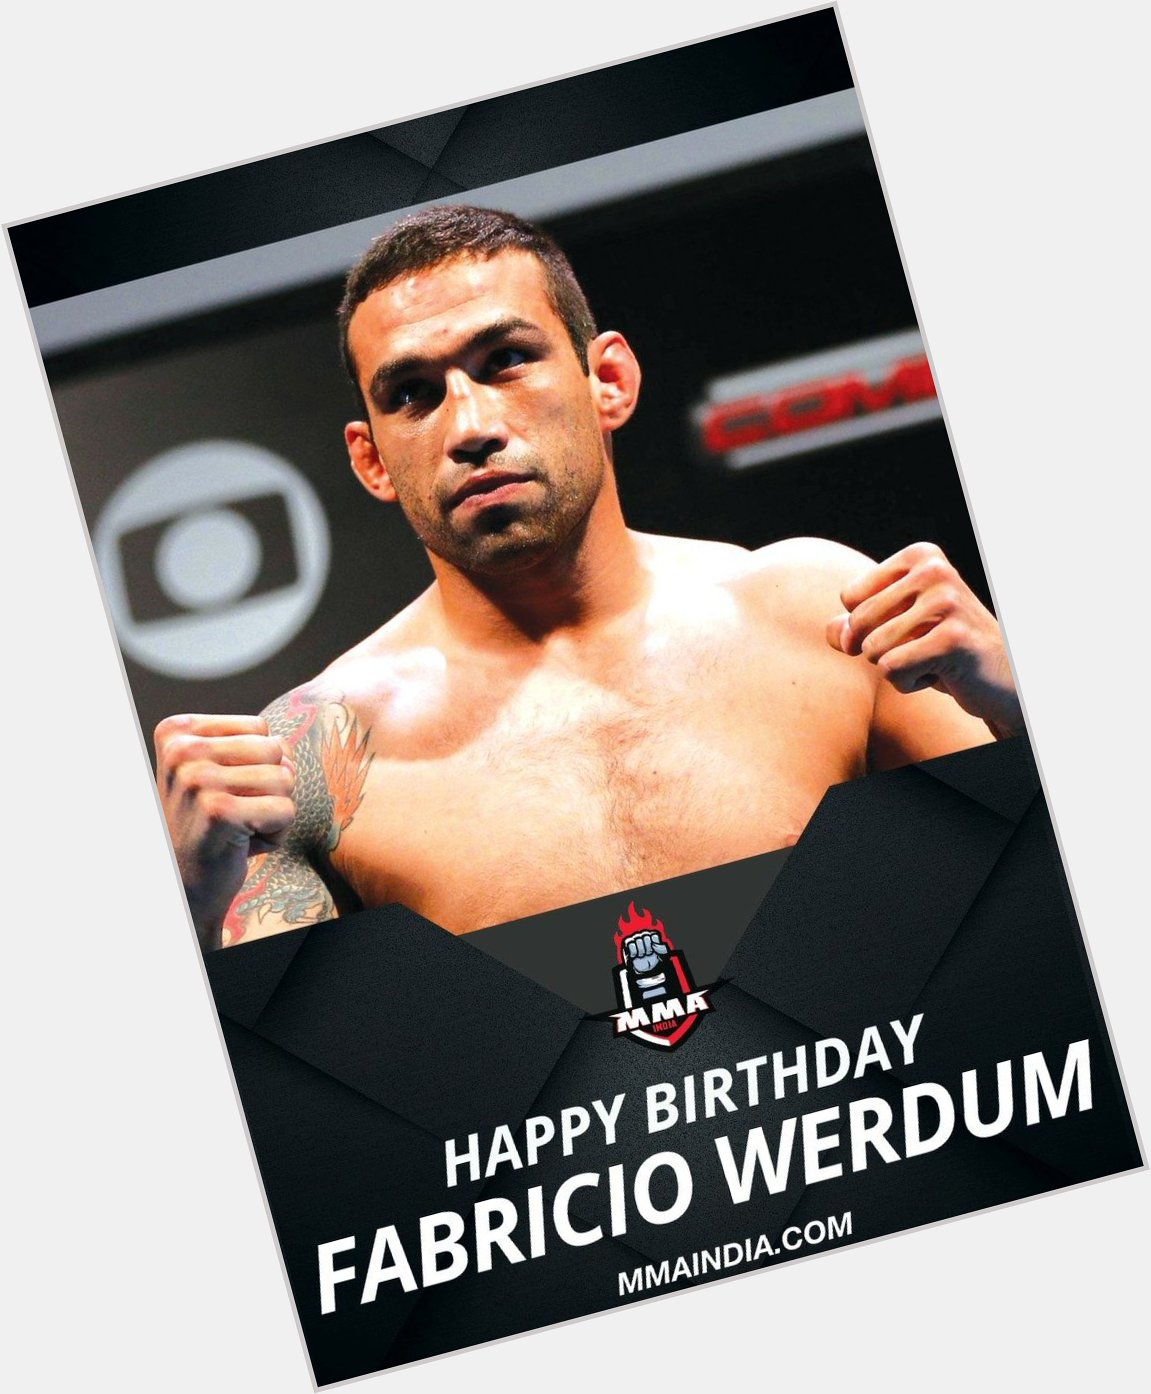 Wishing Fabricio Werdum ( a very Happy Birthday!   One of the best UFC heavyweight!  